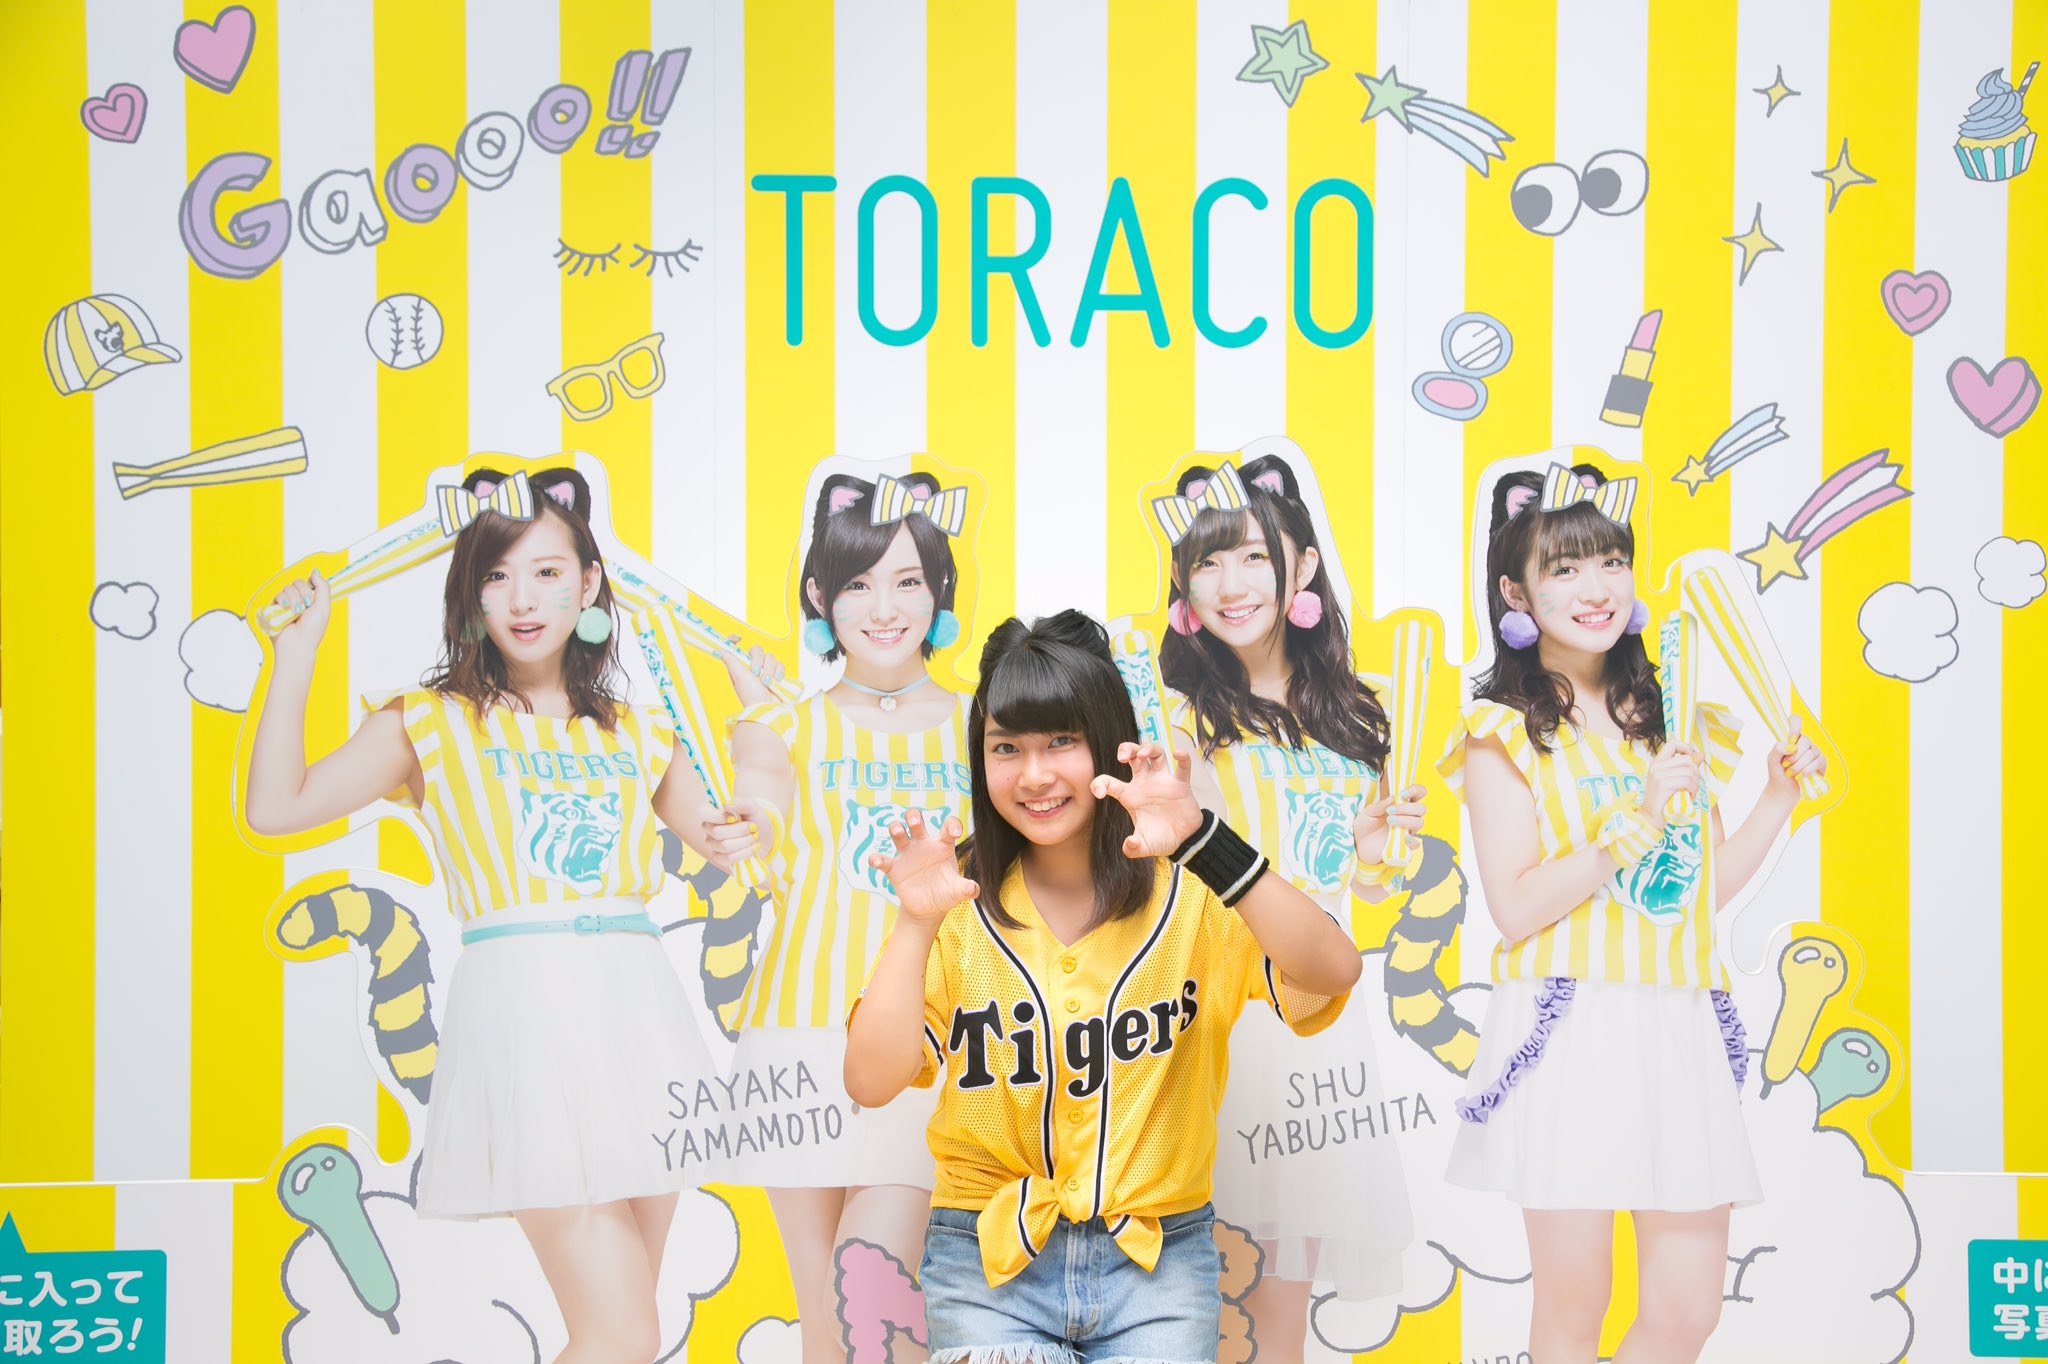 Toraco Na Twitteru Toraco Tigers 阪神タイガース 応援 応援ファッション ユニフォーム トラ耳 トラ耳ヘア T Co Ub17mzge6s Twitter